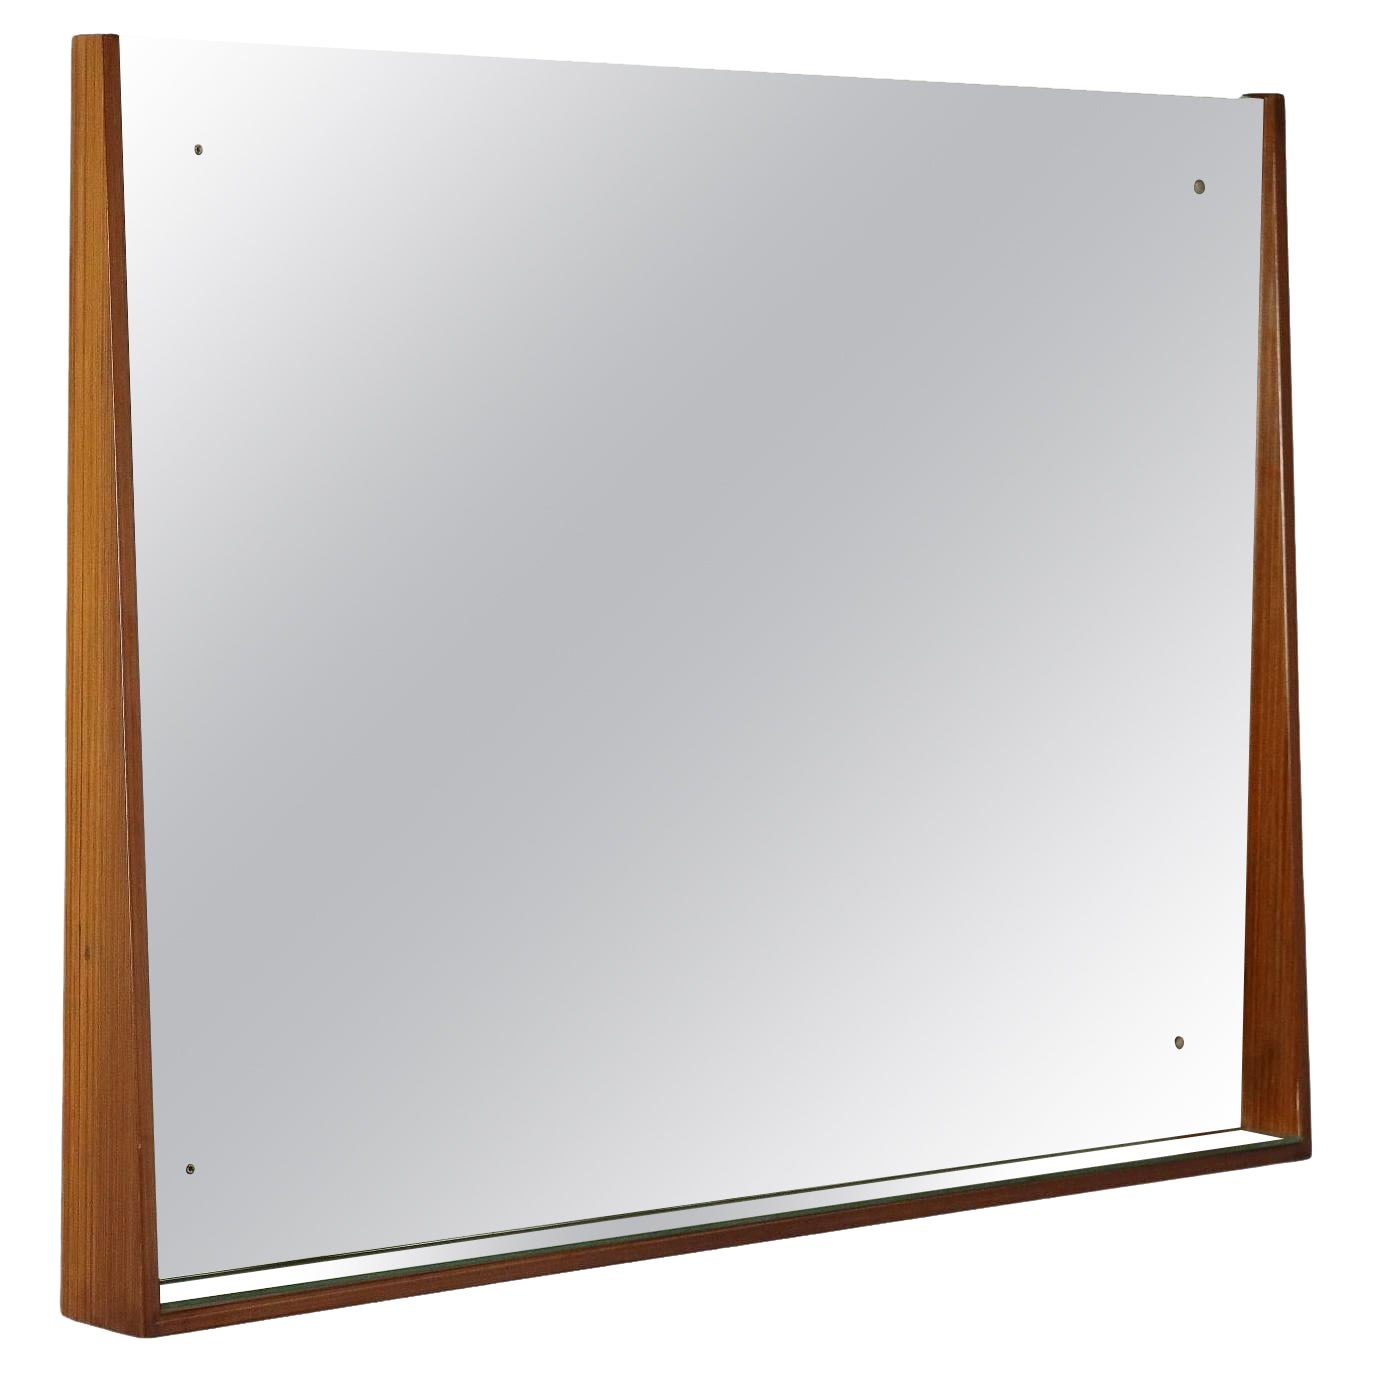 1960s rectangular mirror